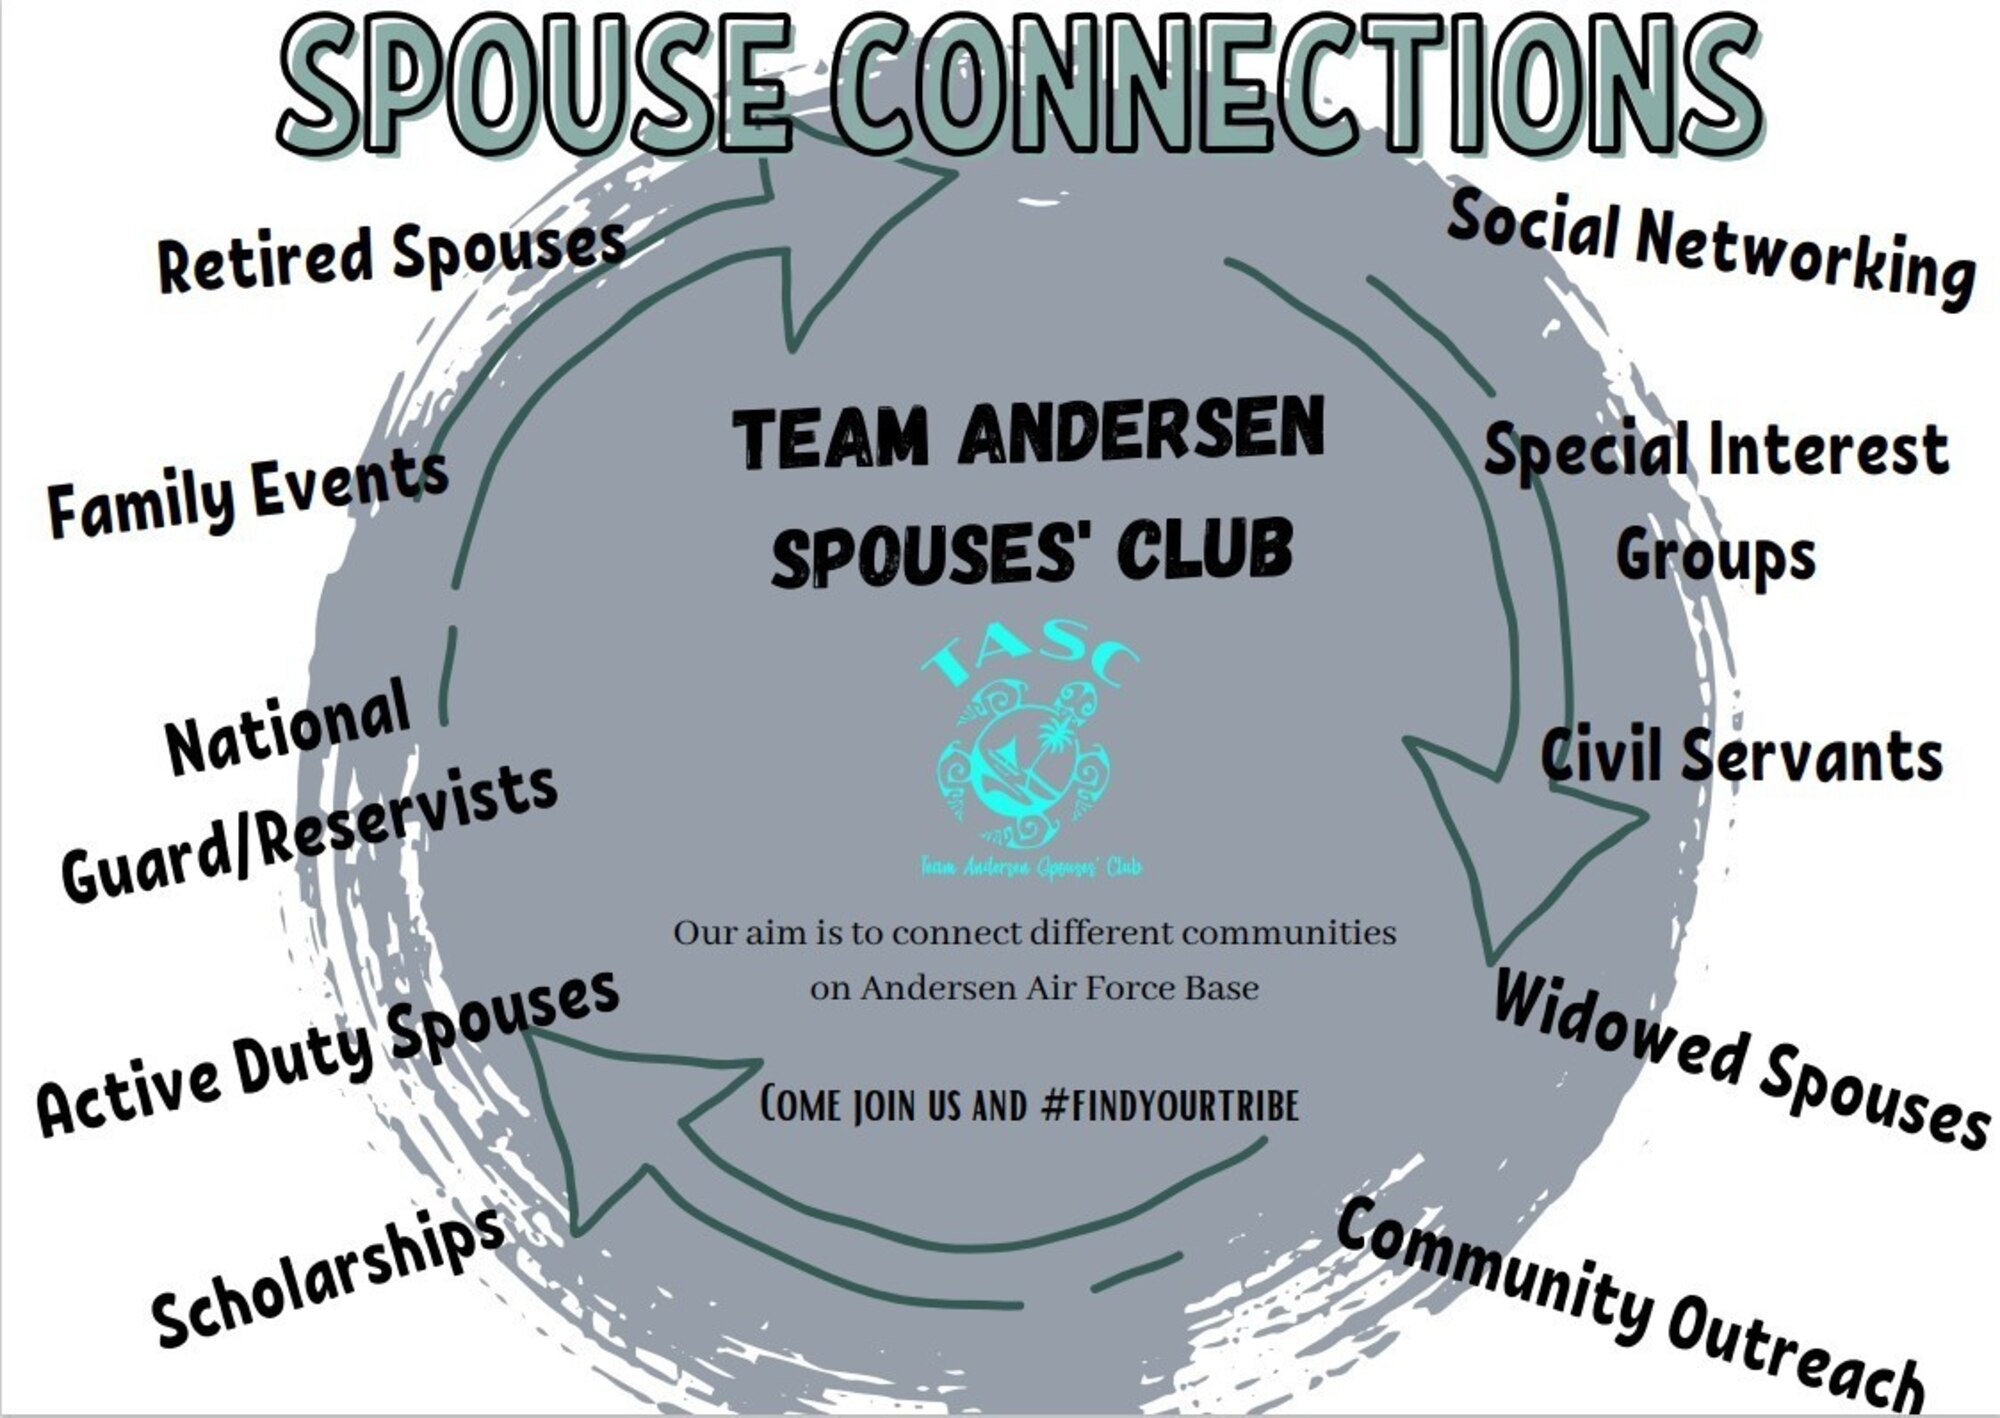 Team Andersen Spouses' Club logo.